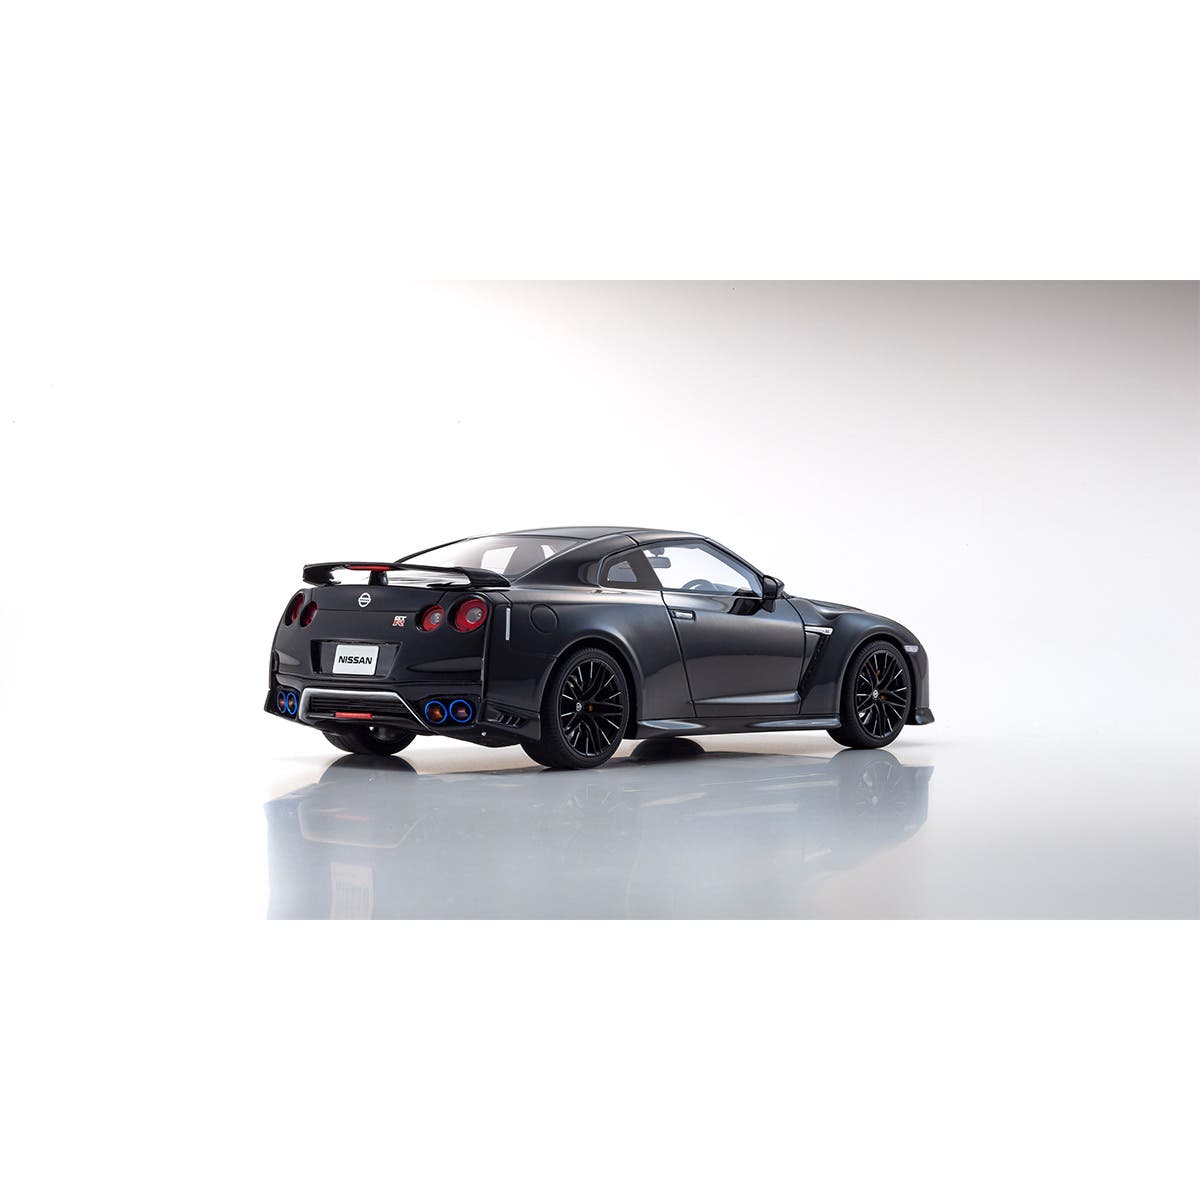 Nissan GT-R  2020 - Black - 1:18 Scale Resin Model Car